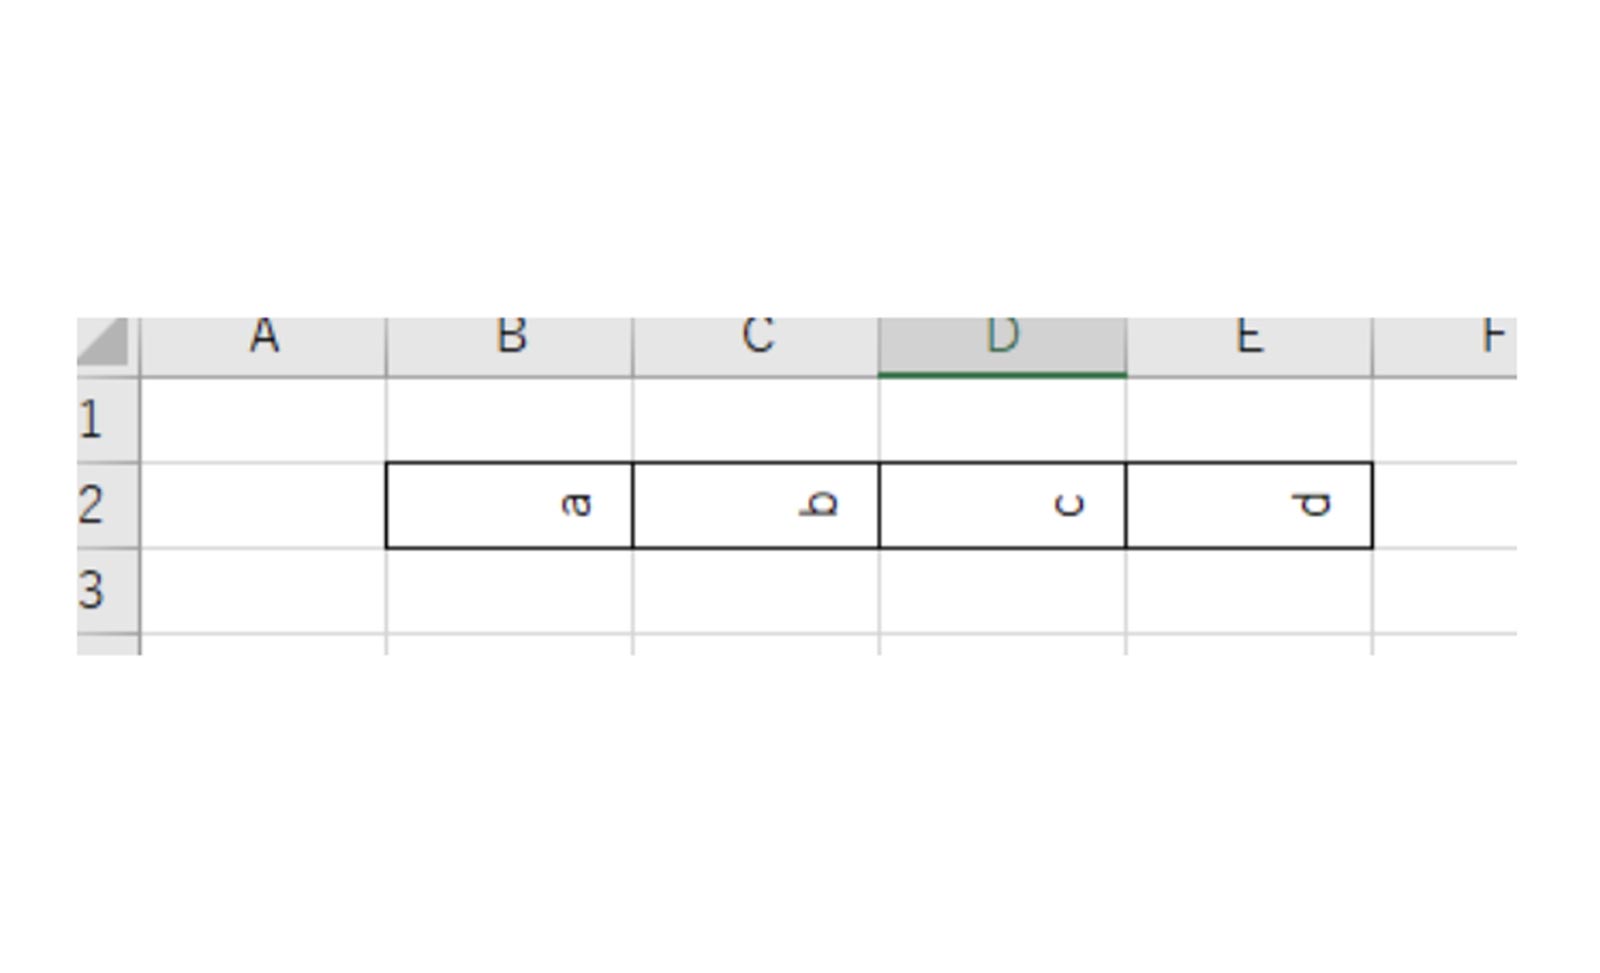 Excelで文字や数字を90度回転させる方法